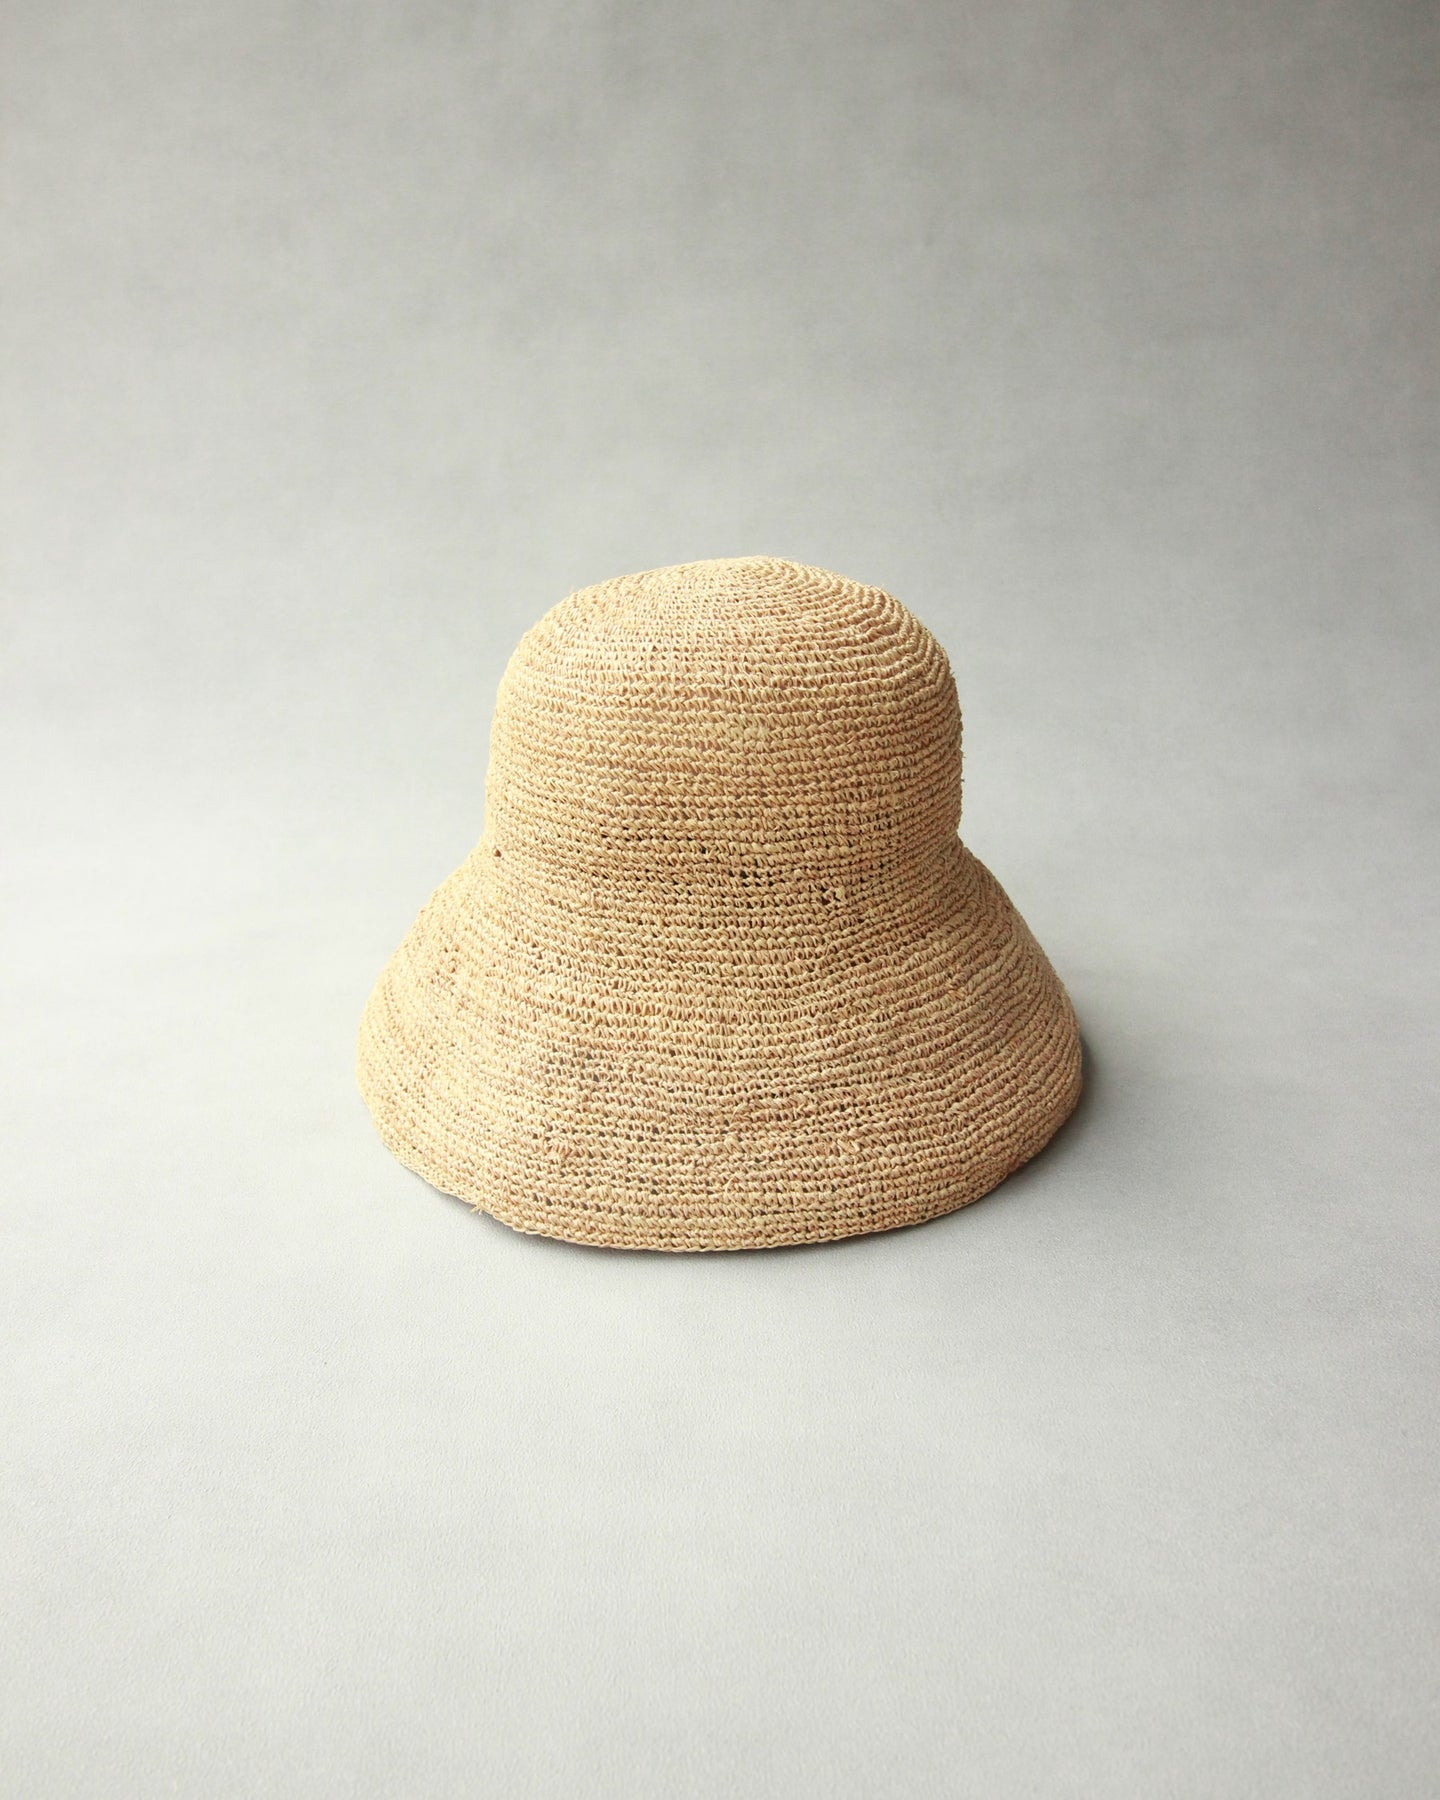 N-1095 / Top Knitting Hat